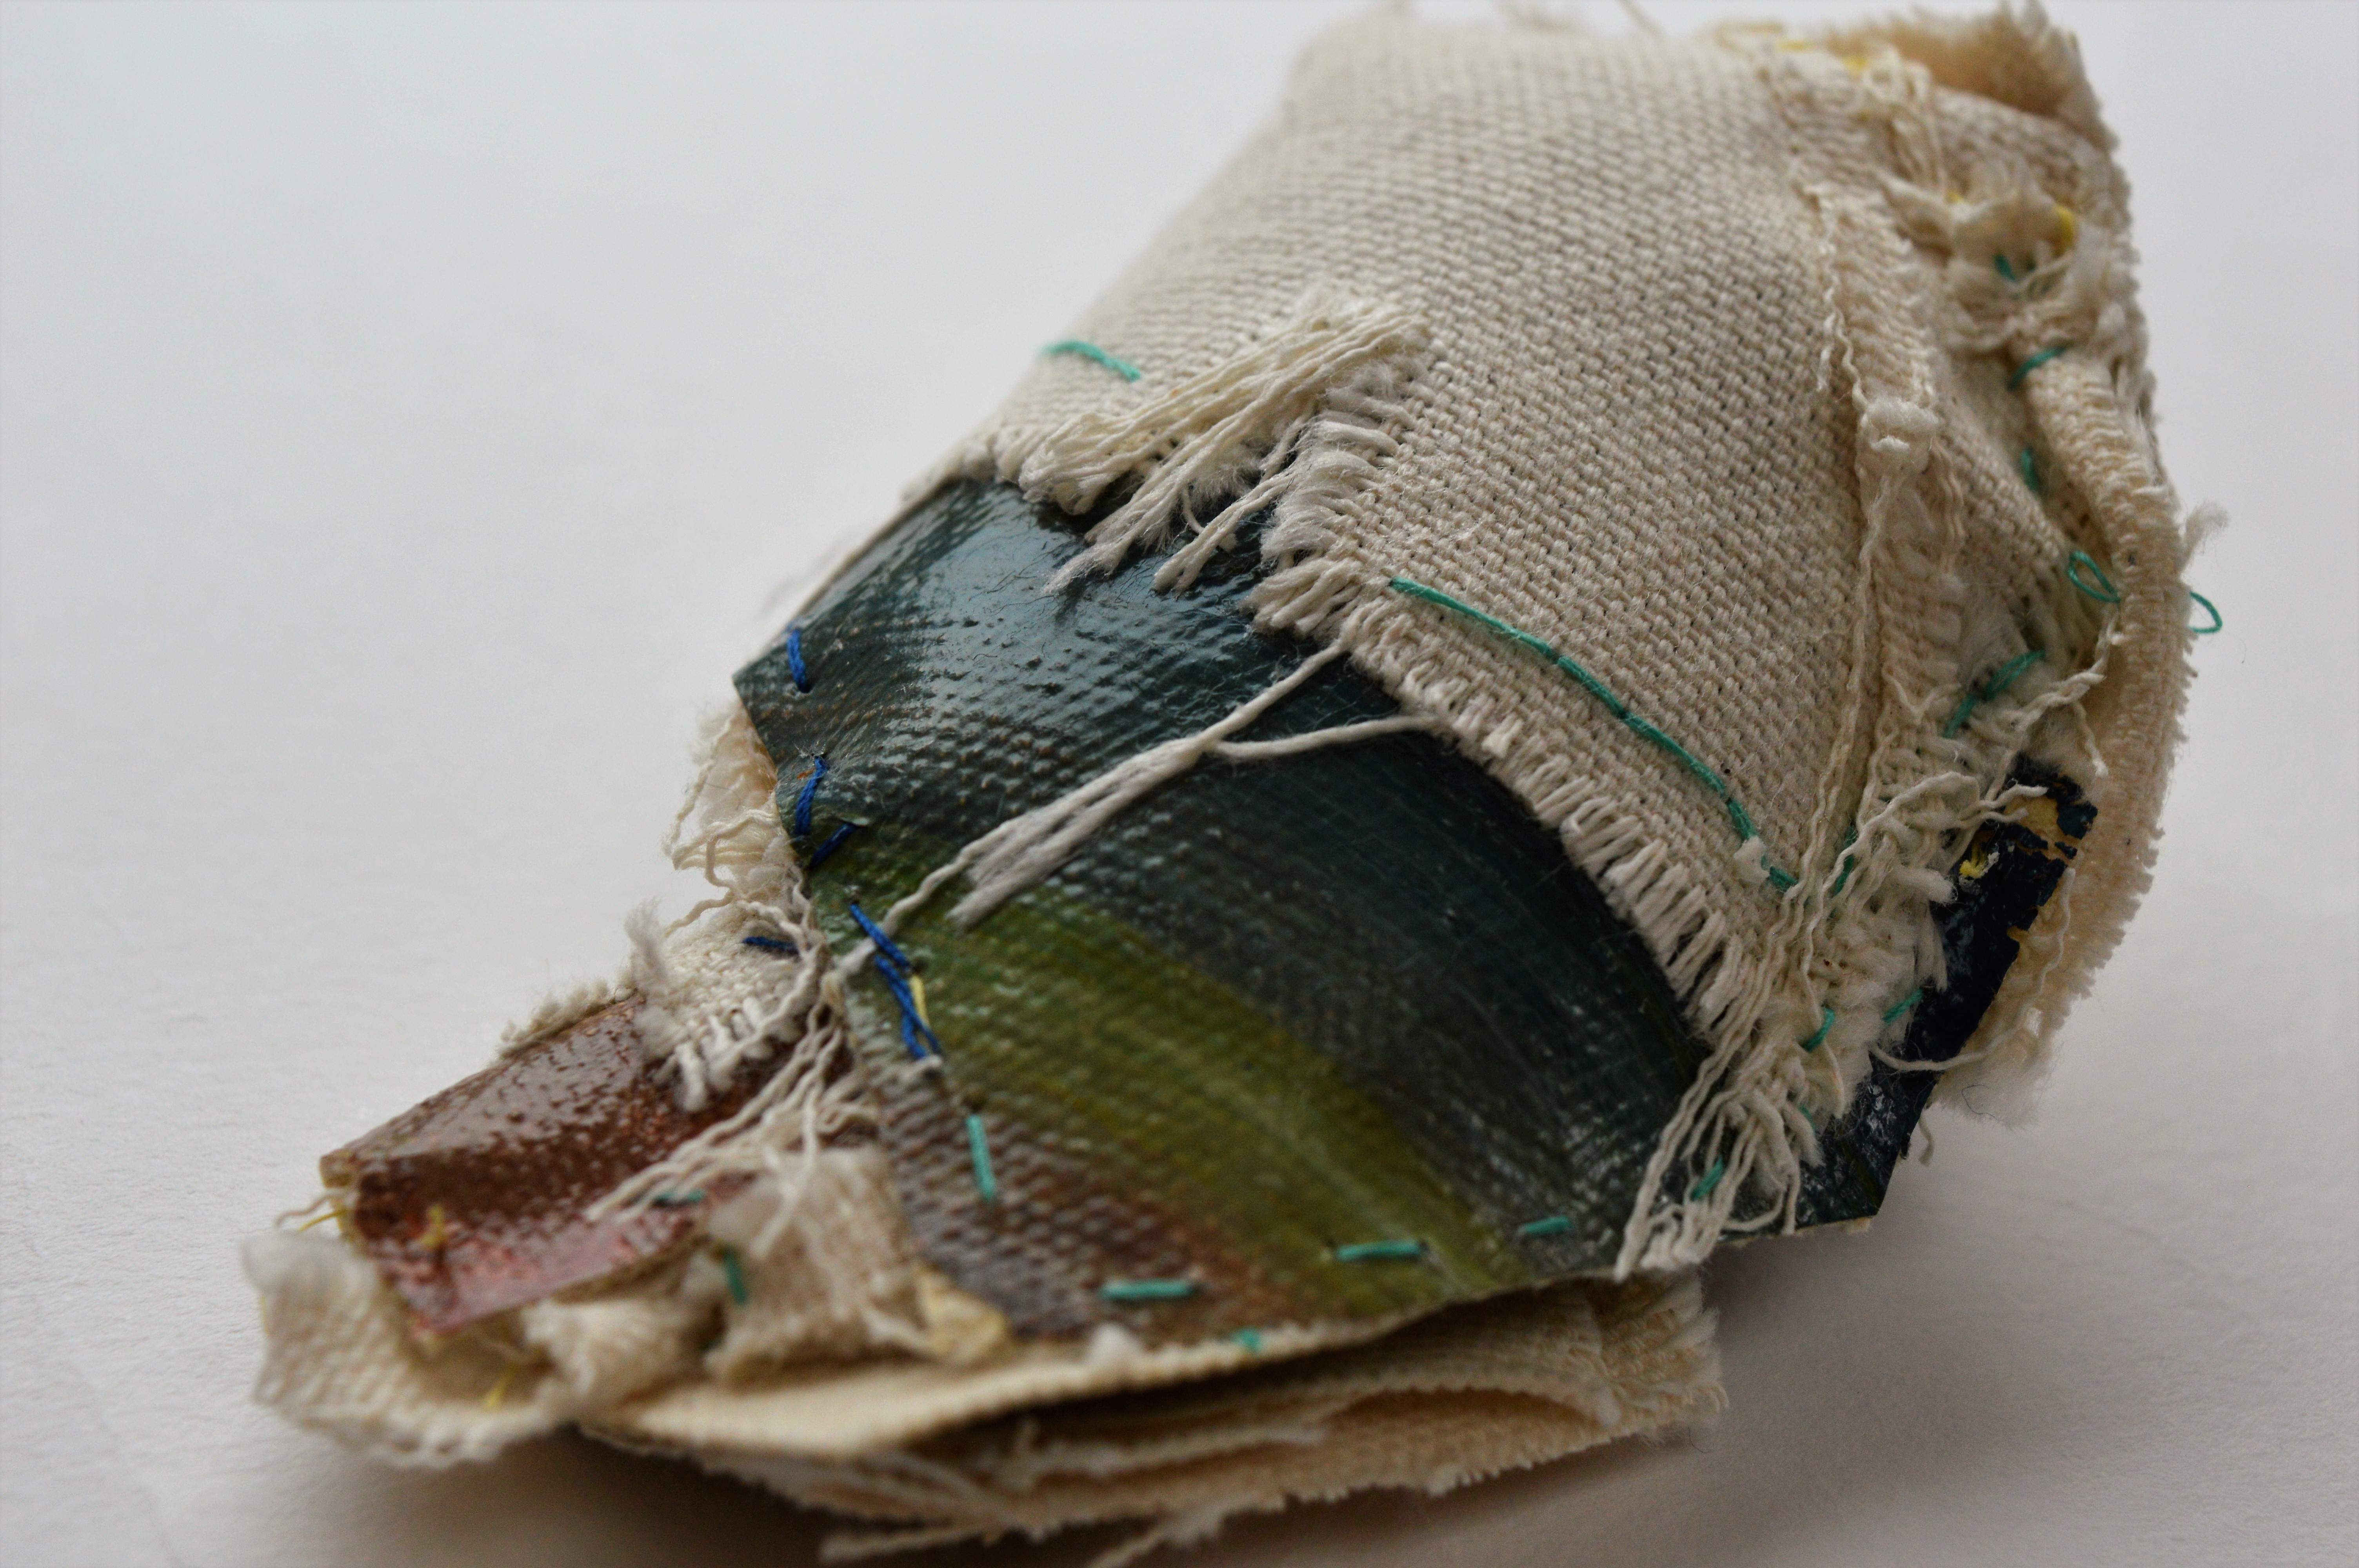 Textile fragments. 2018 - 2020. Oil on canvas, latex, cotton thread.